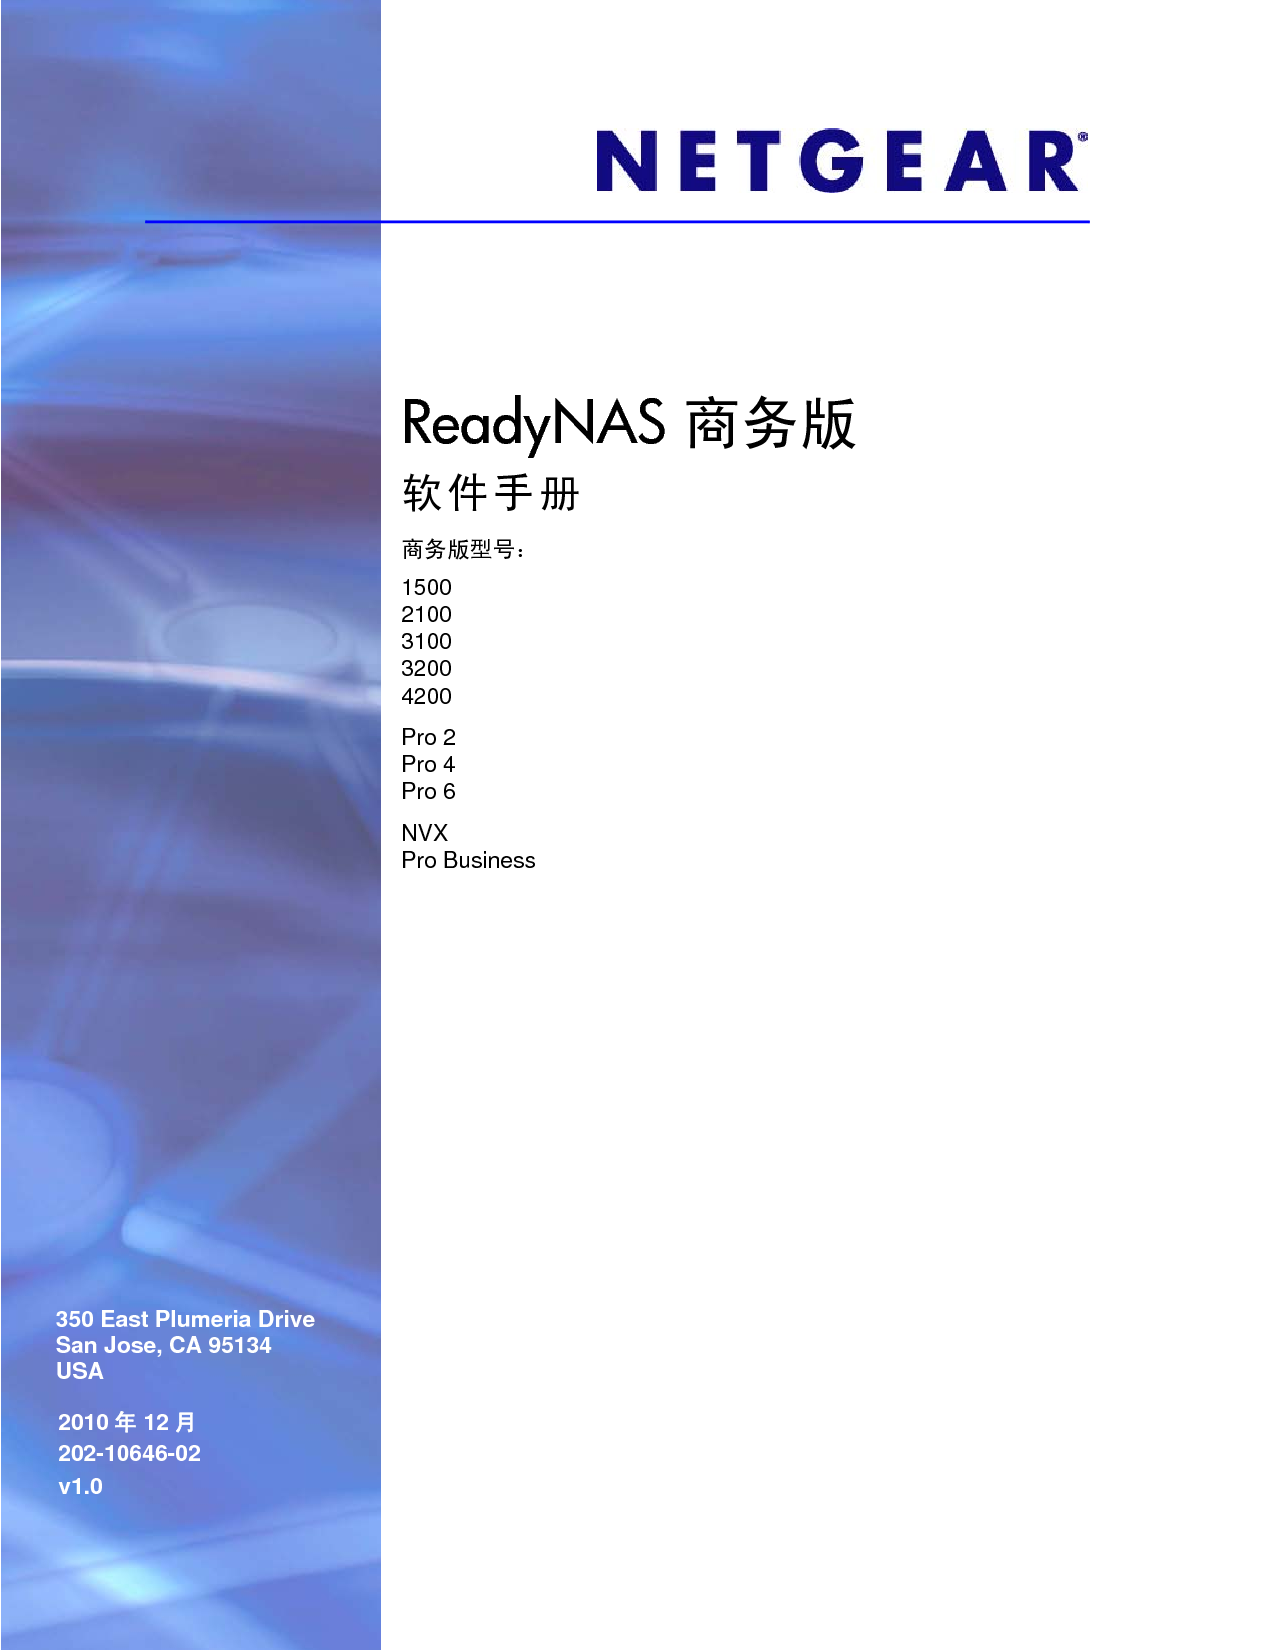 网件 Netgear READYNAS 1500, READYNAS PRO BUSINESS 软件手册 封面